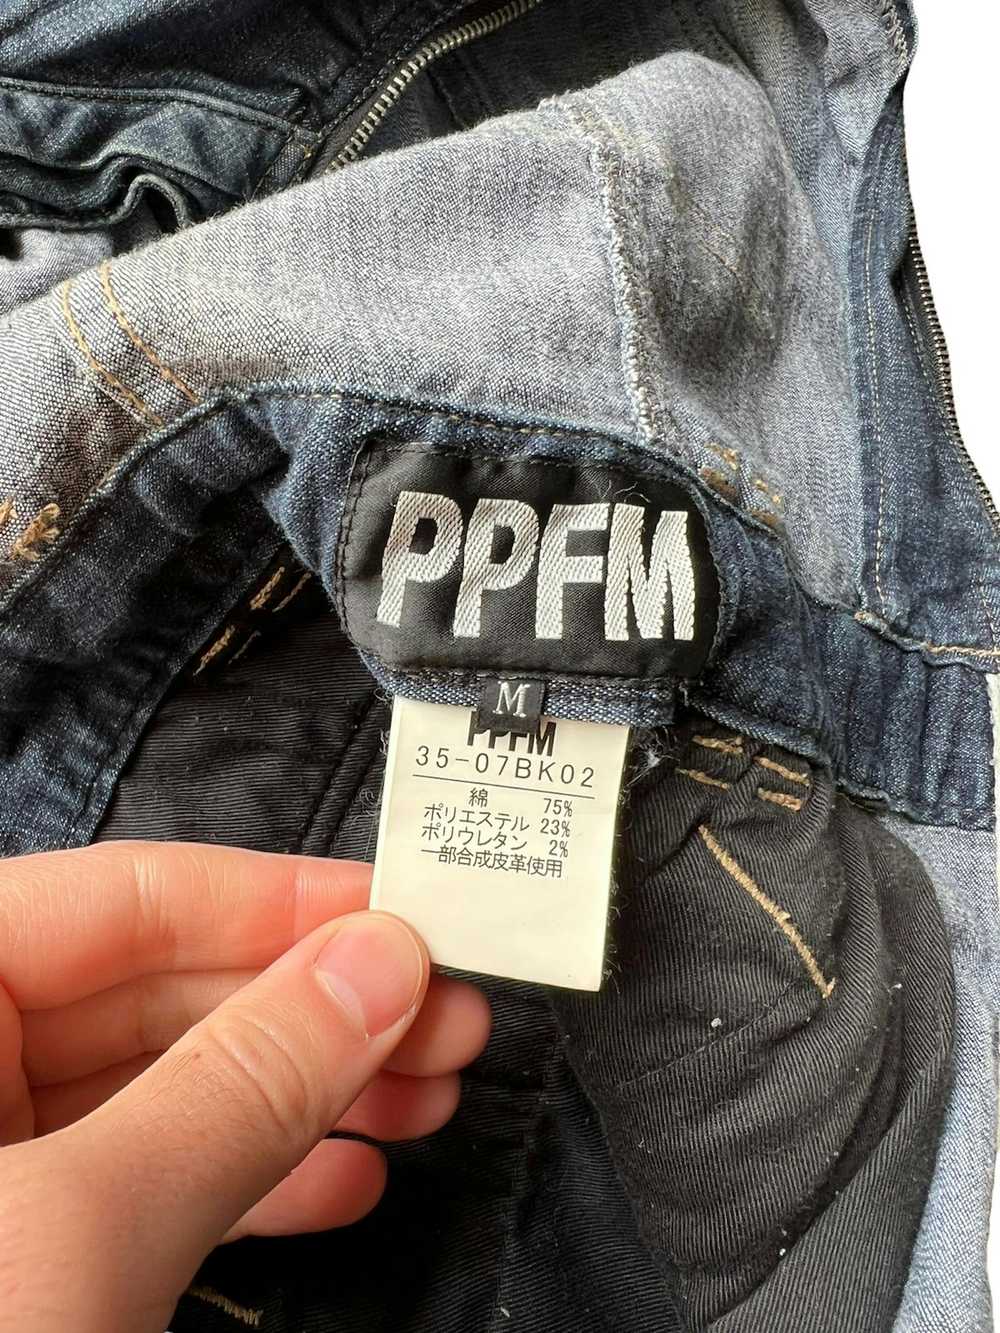 PPFM Denim Grunge Mechanic Bondage Jumpsuit - image 10